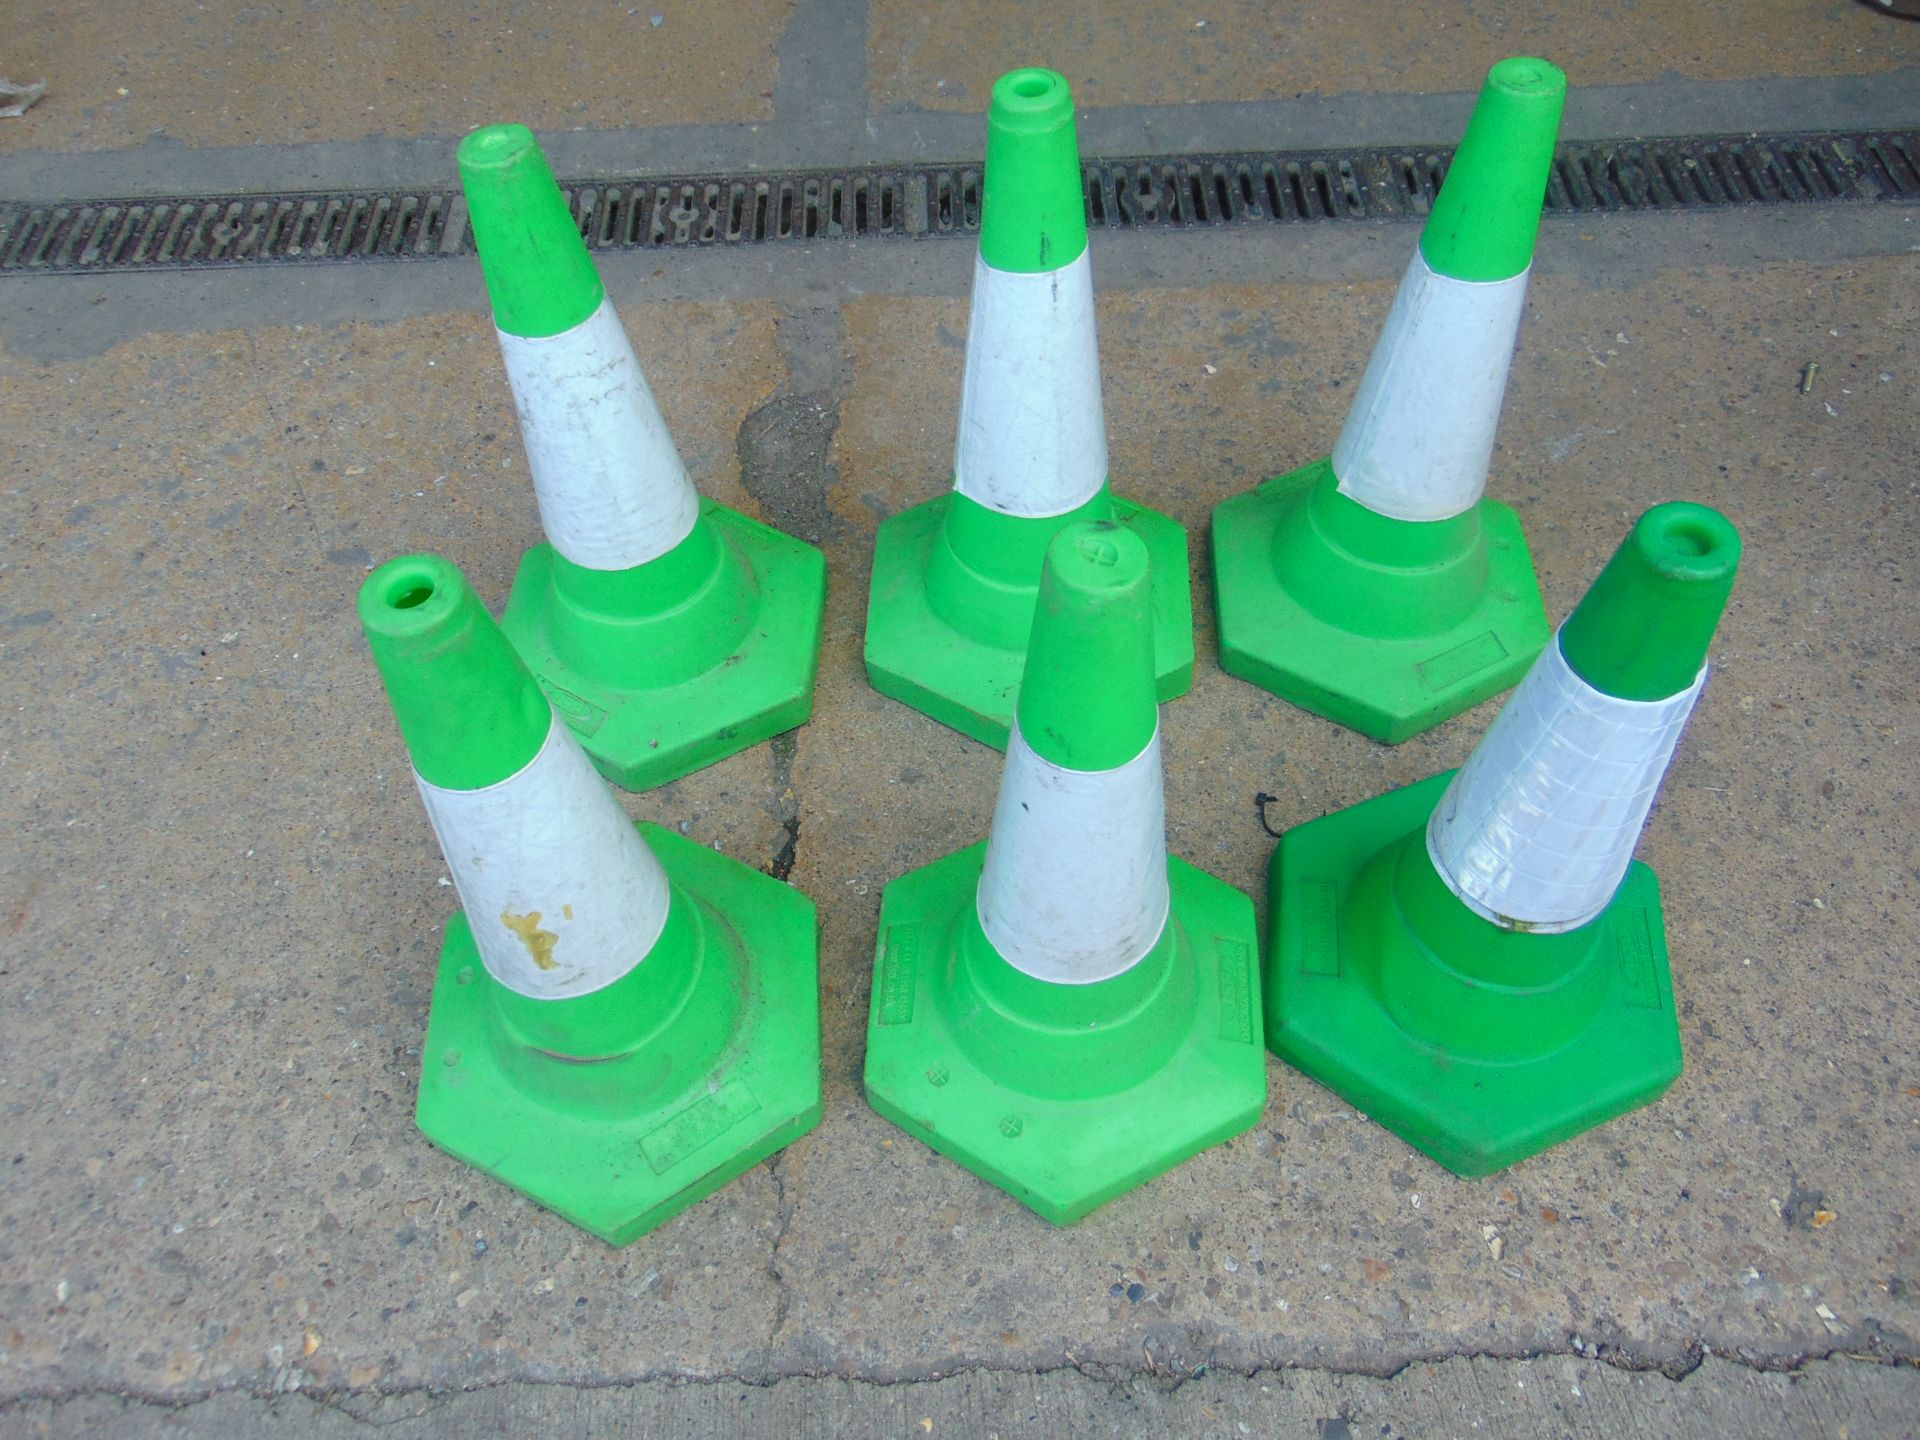 6 x Green Traffic Cones